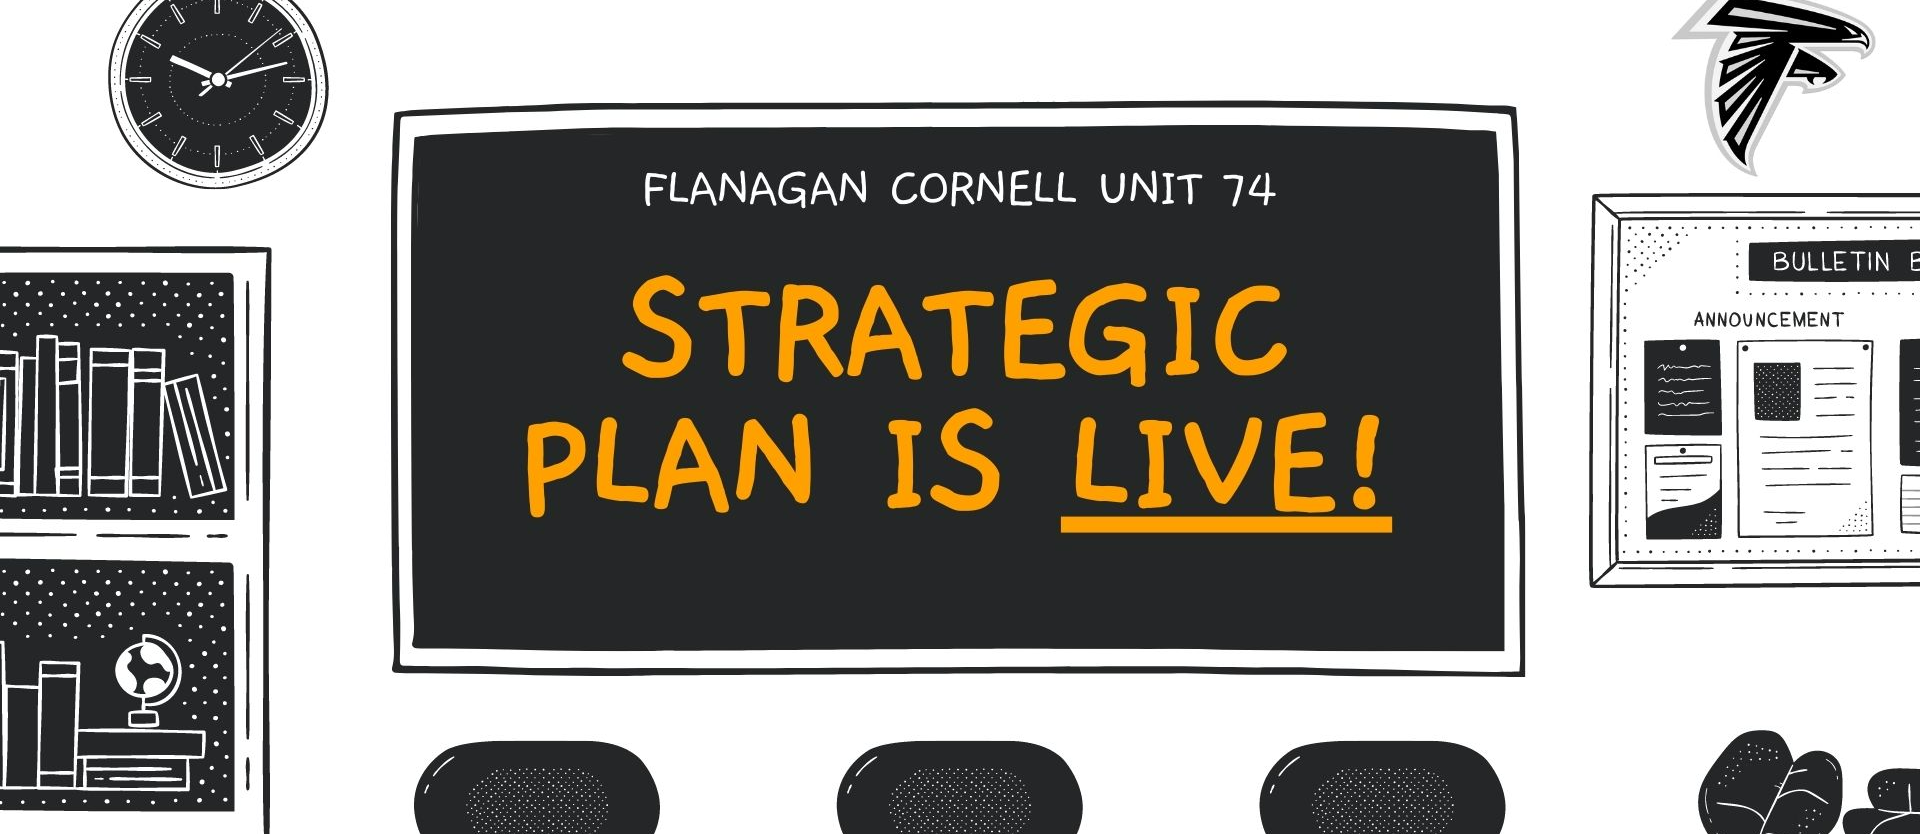 Flanagan Cornell Unit 74 Strategic Plan is Live